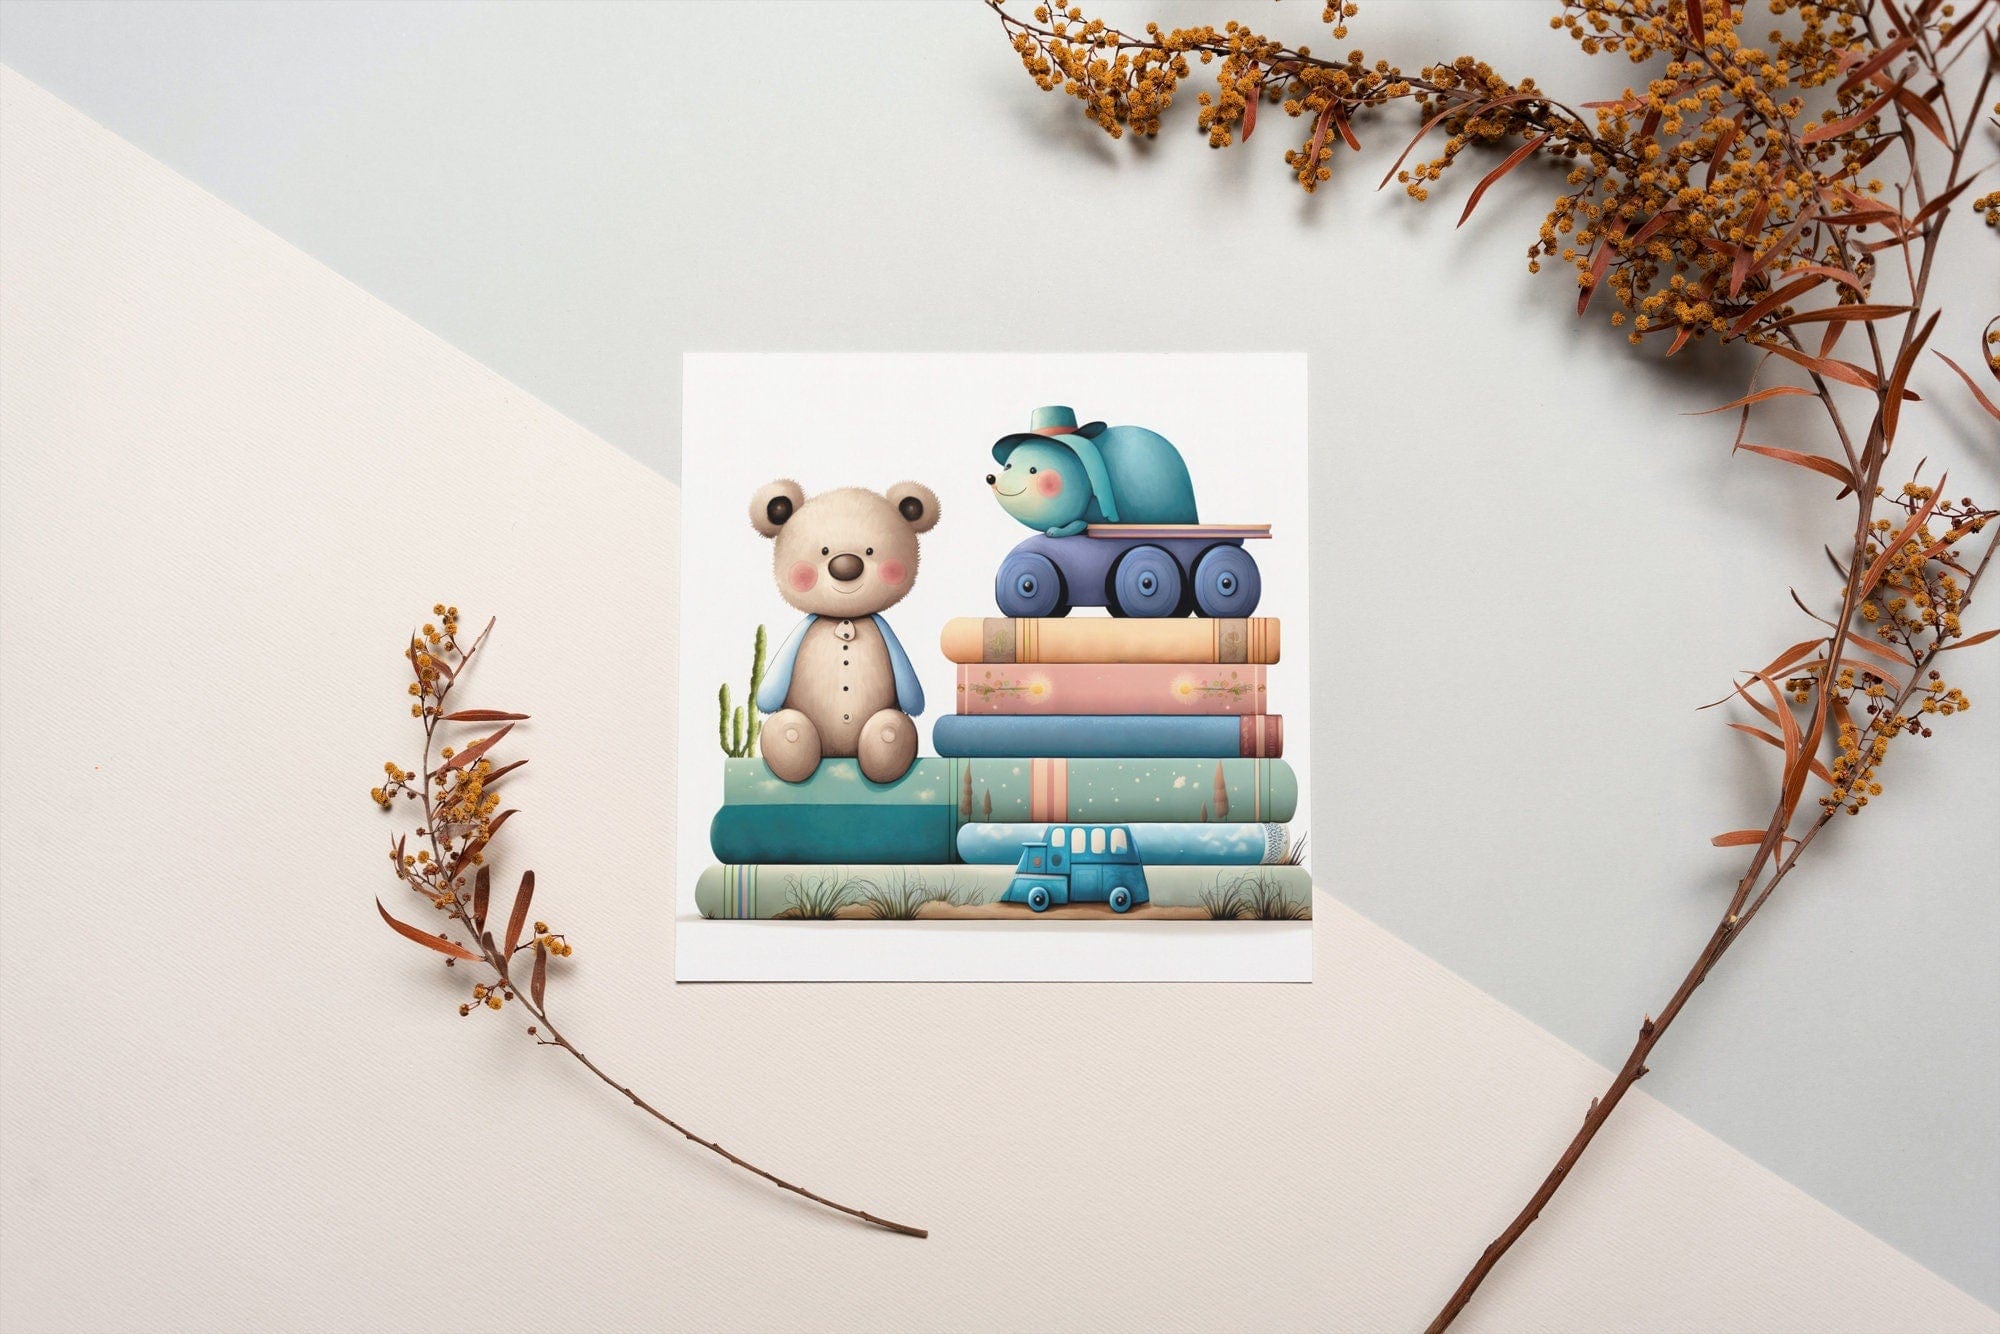 Adorable Baby Shower Illustrations Bundle - Boy Edition - 100 Premium Graphics for Invitations, Decorations, and More Digital Download Sumobundle